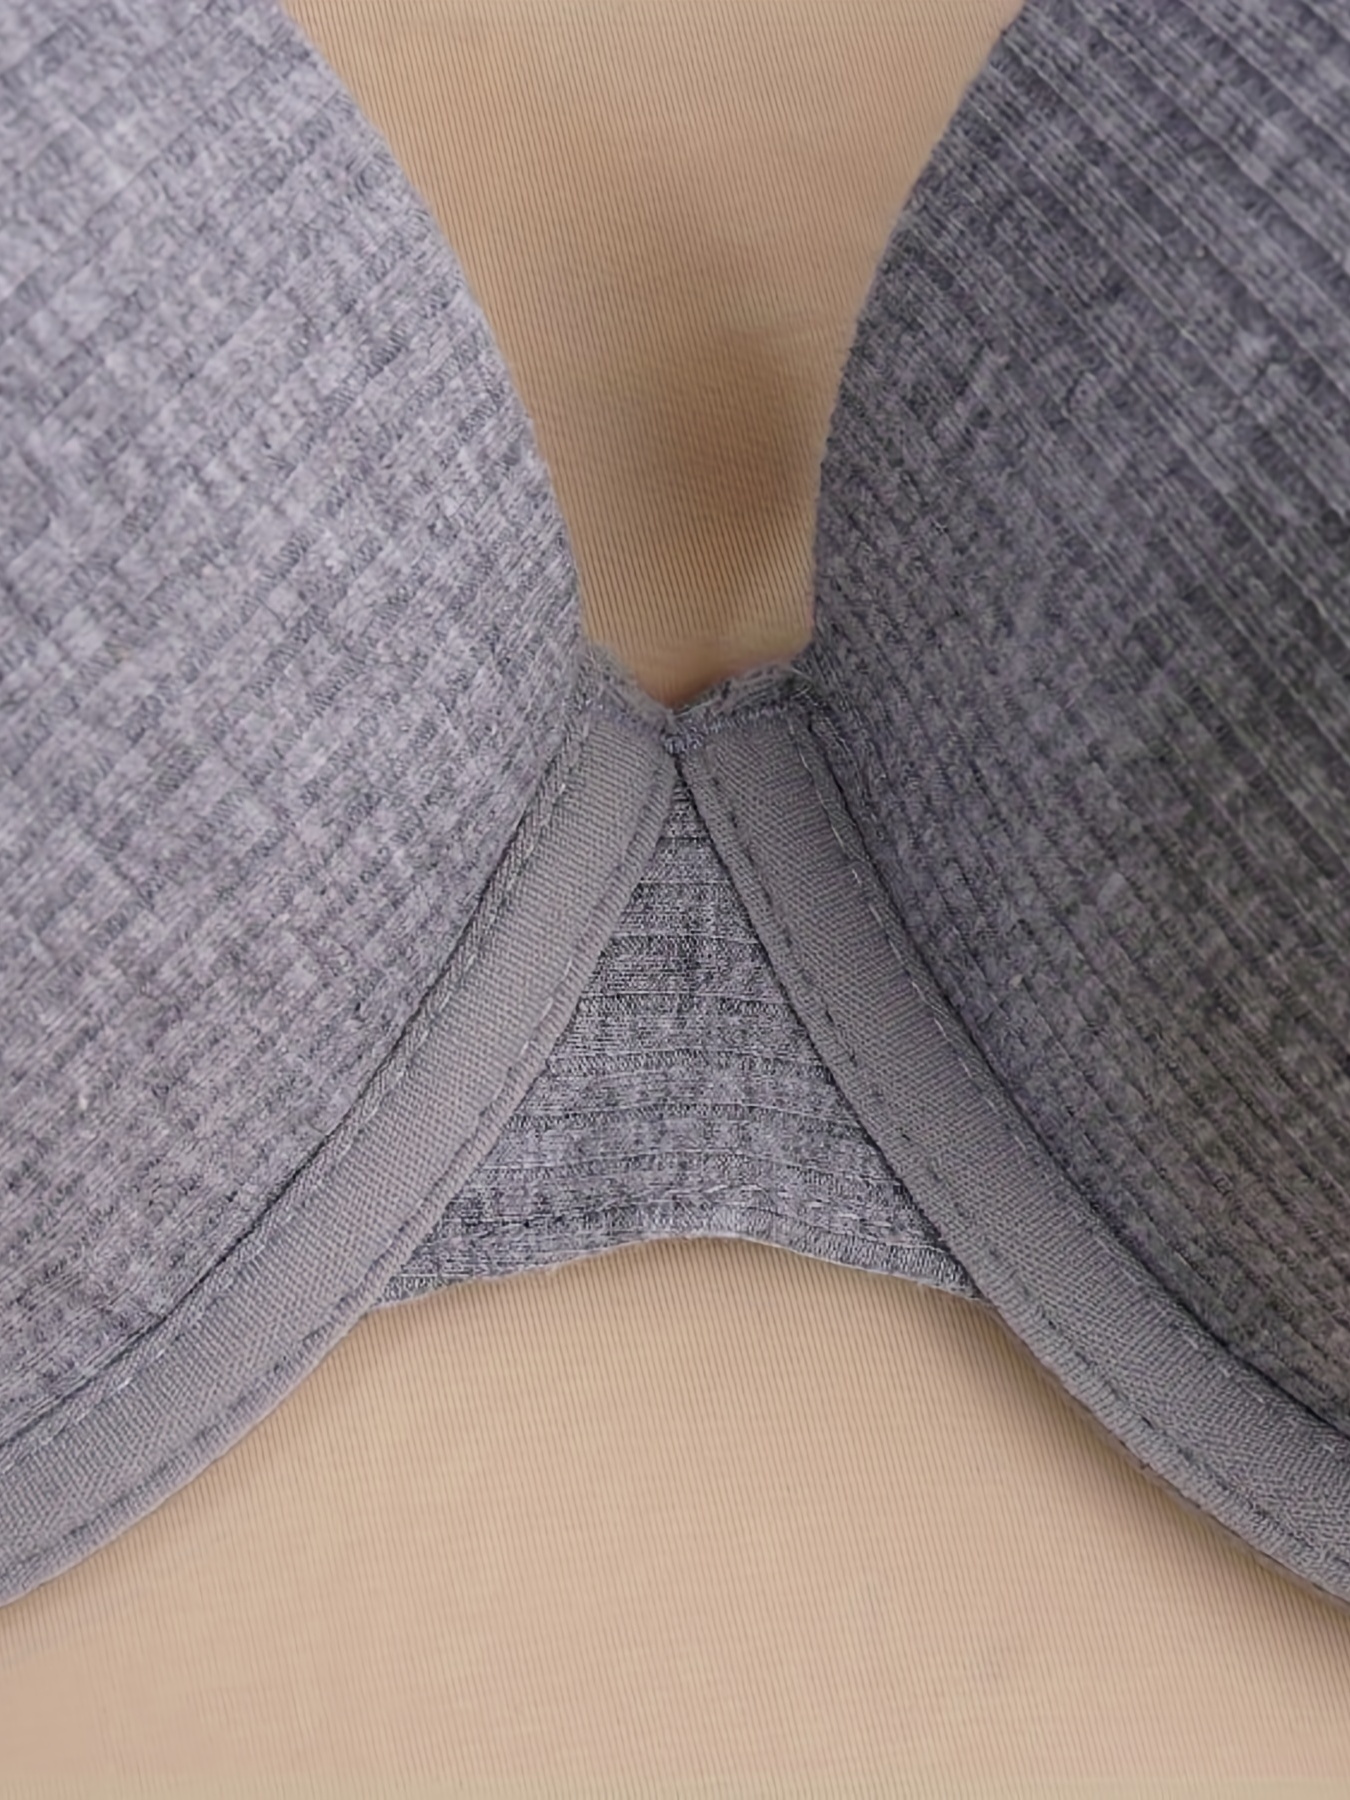 Tingmei 4th generation pull-up anti-sagging push-up bra for women